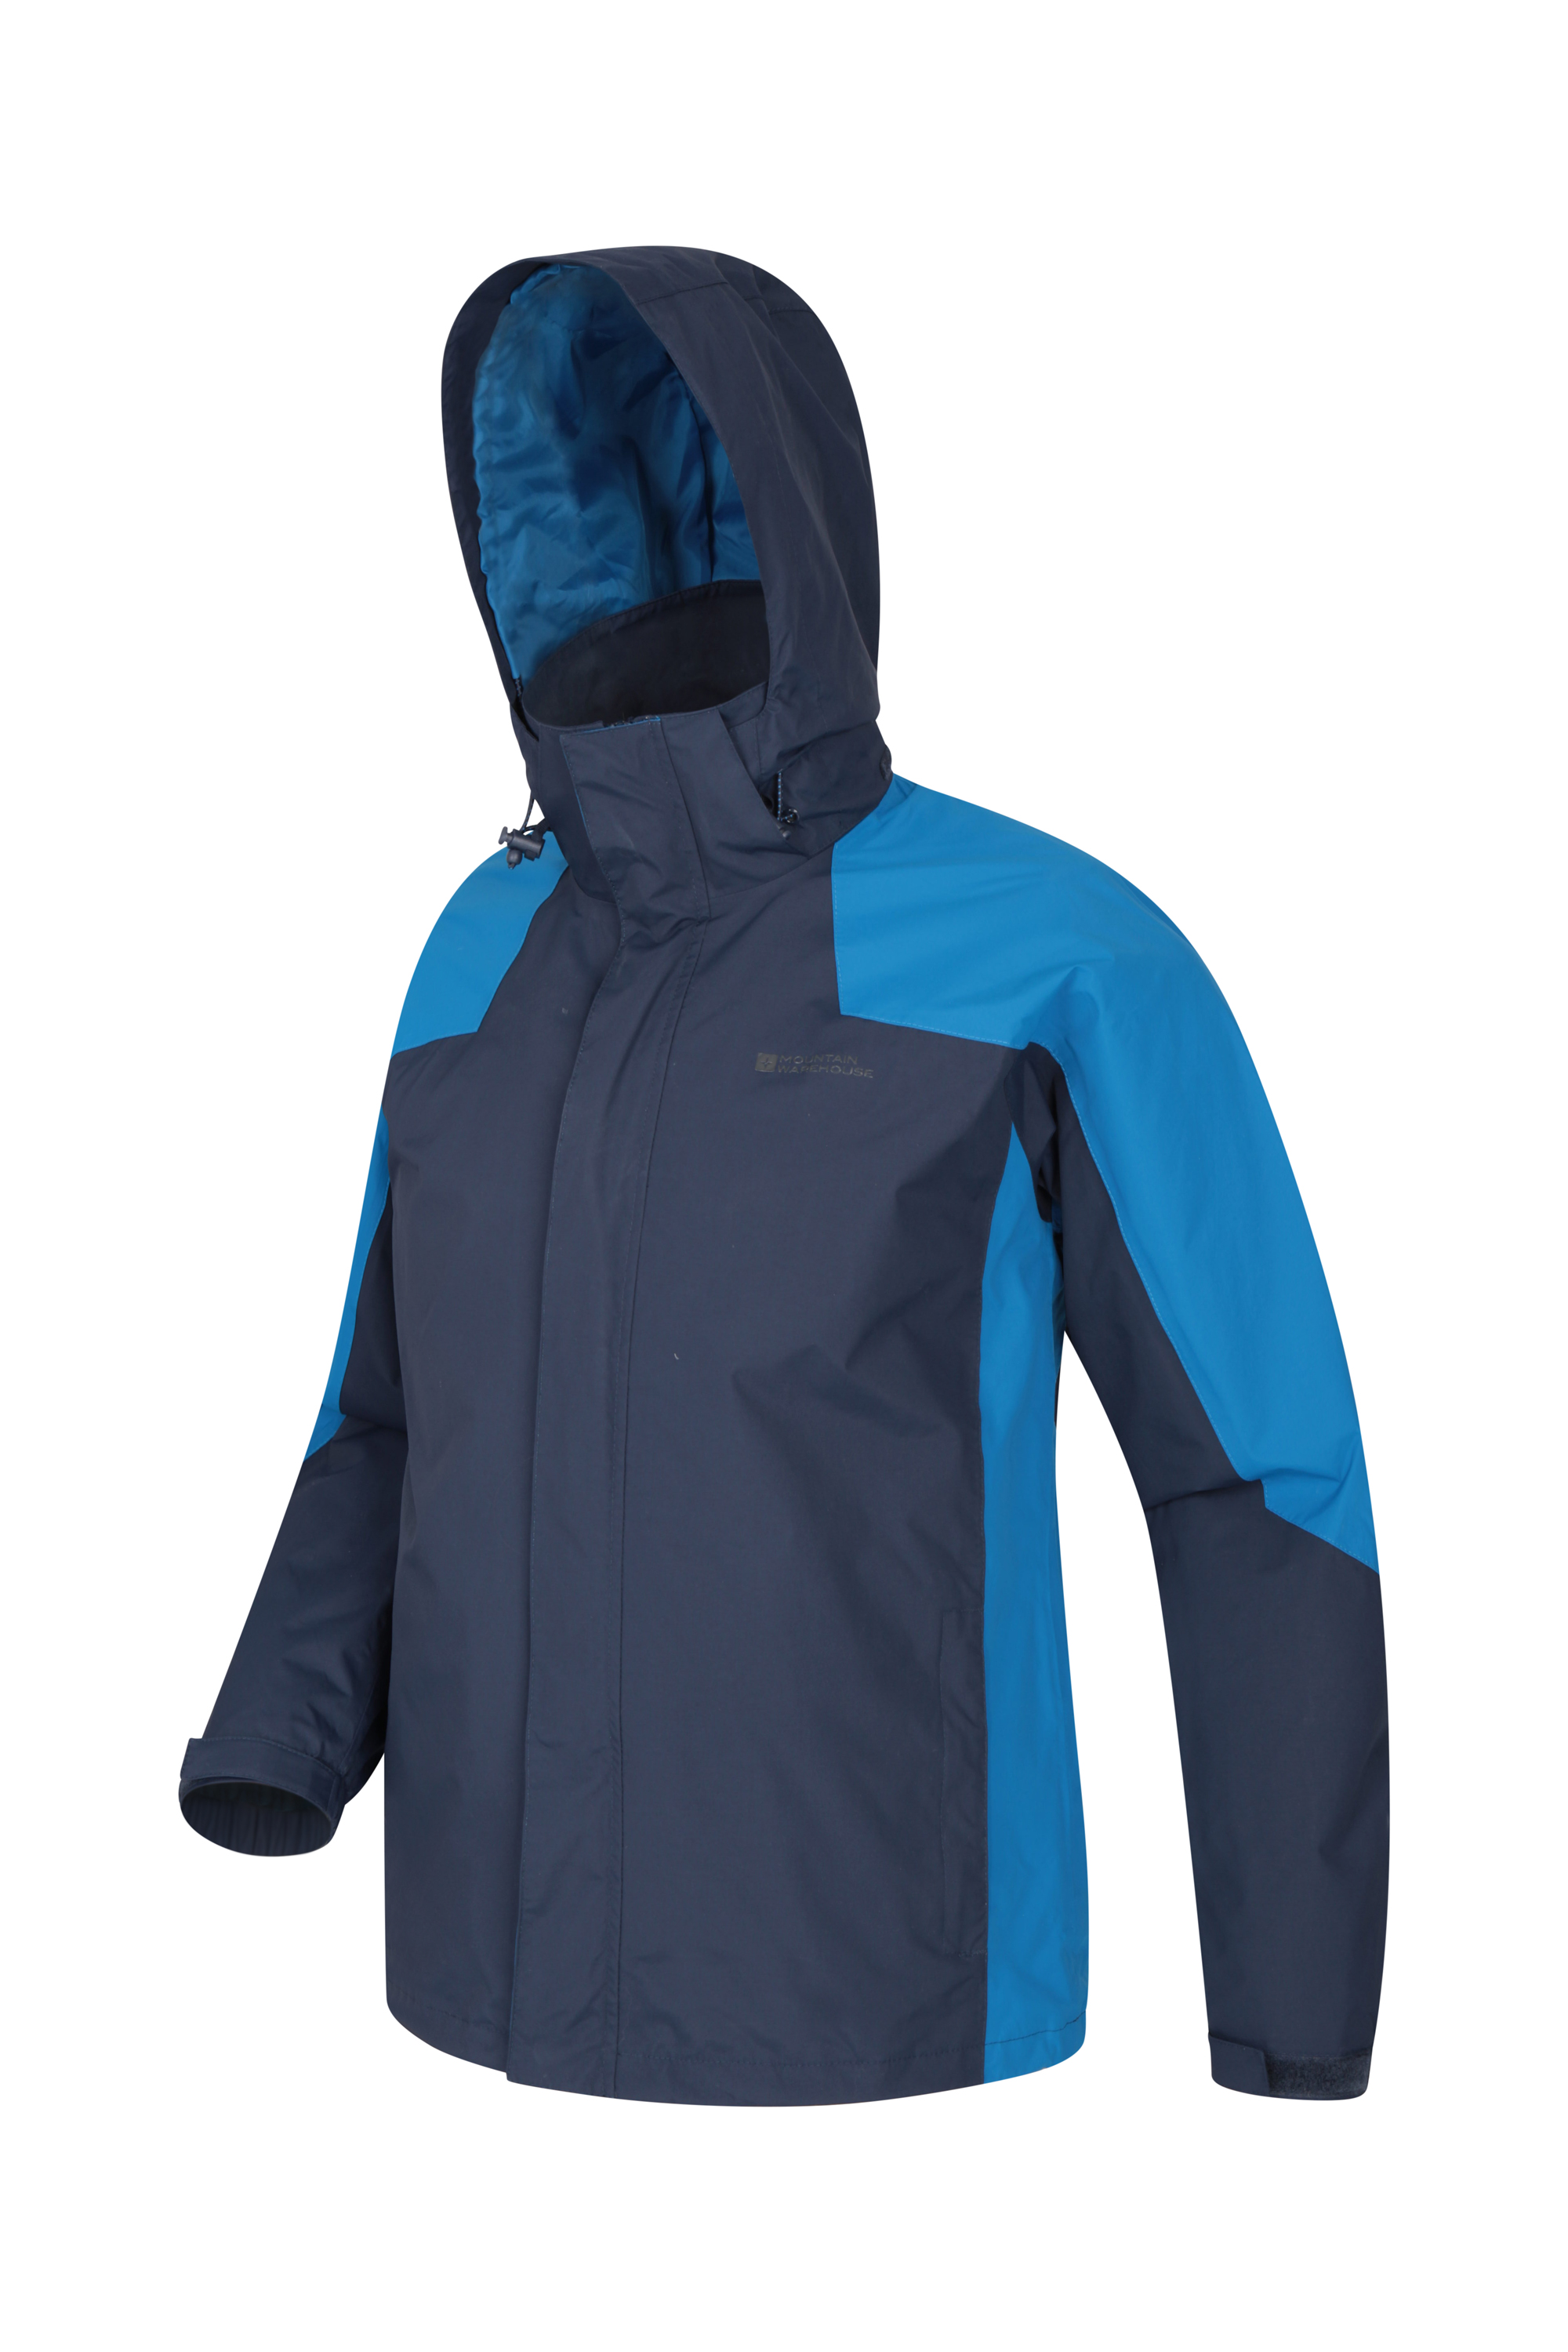 Mountain Warehouse Gust Waterproof Jacket - Review